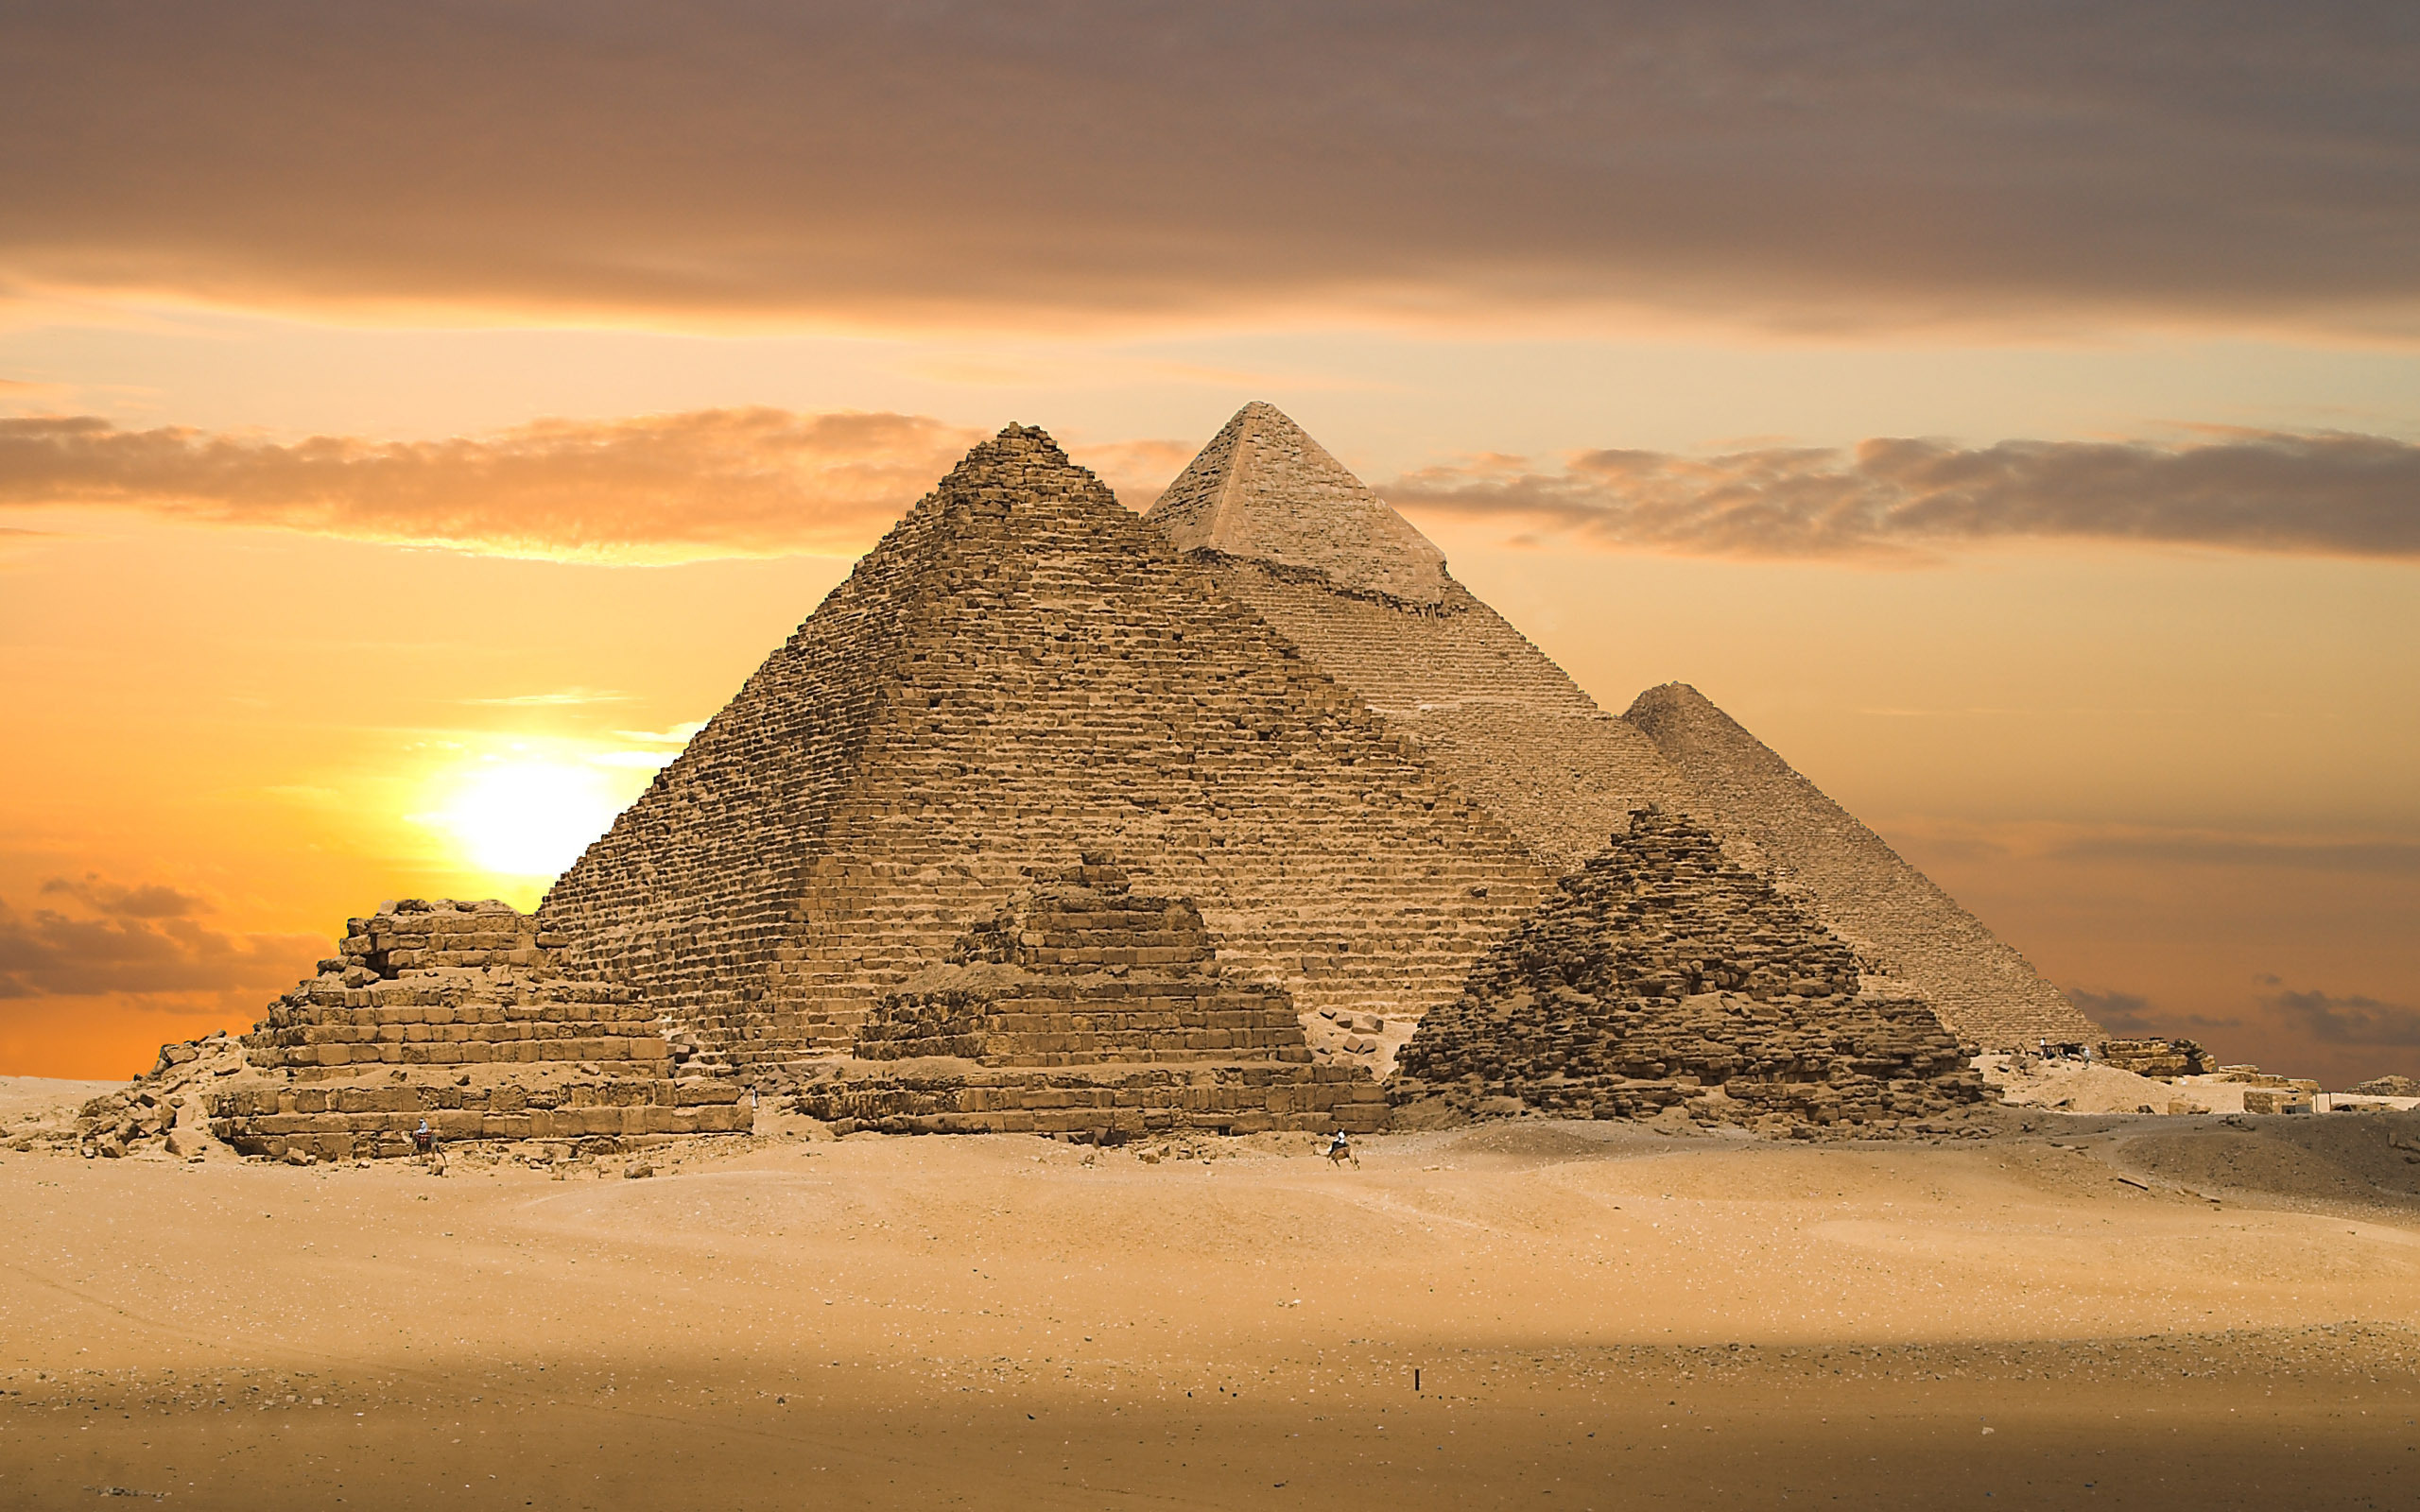 Wallpapers desert sand pyramids on the desktop